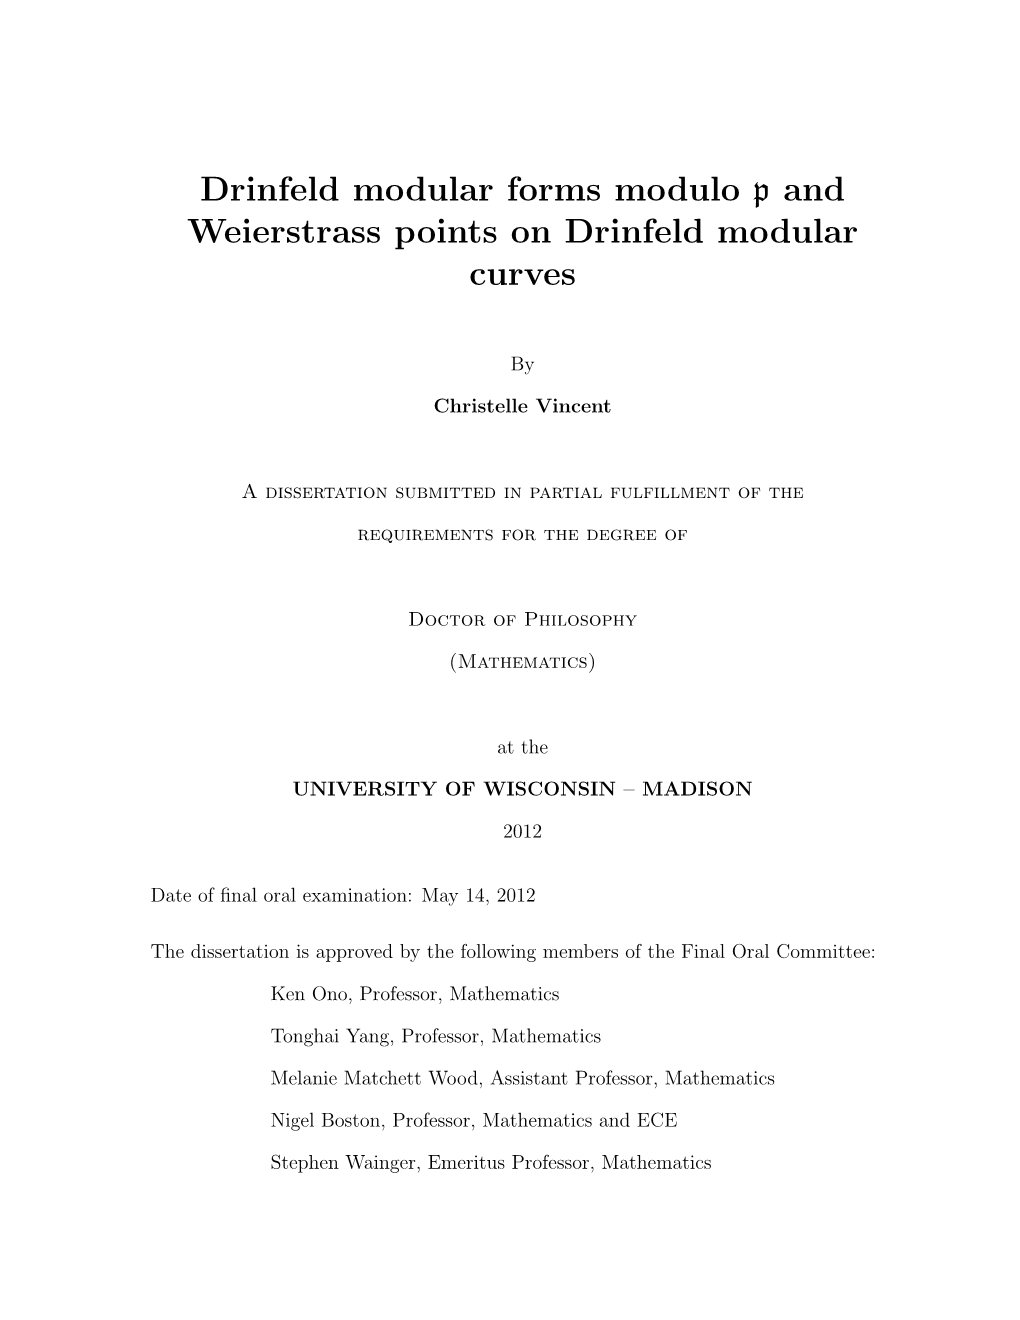 Drinfeld Modular Forms Modulo P and Weierstrass Points on Drinfeld Modular Curves